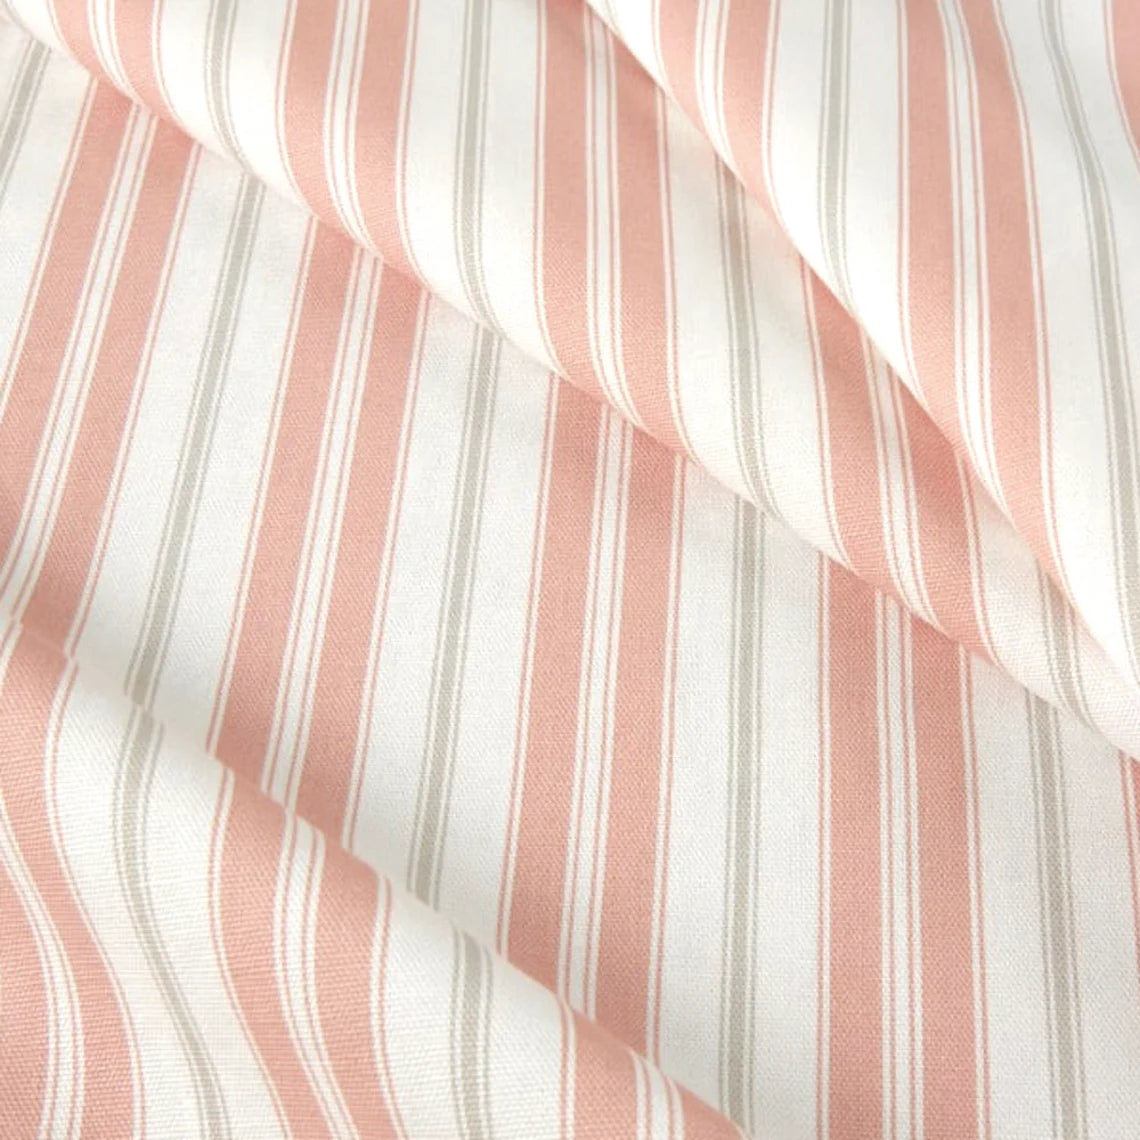 scalloped valance in newbury blush stripe- pink, gray, white